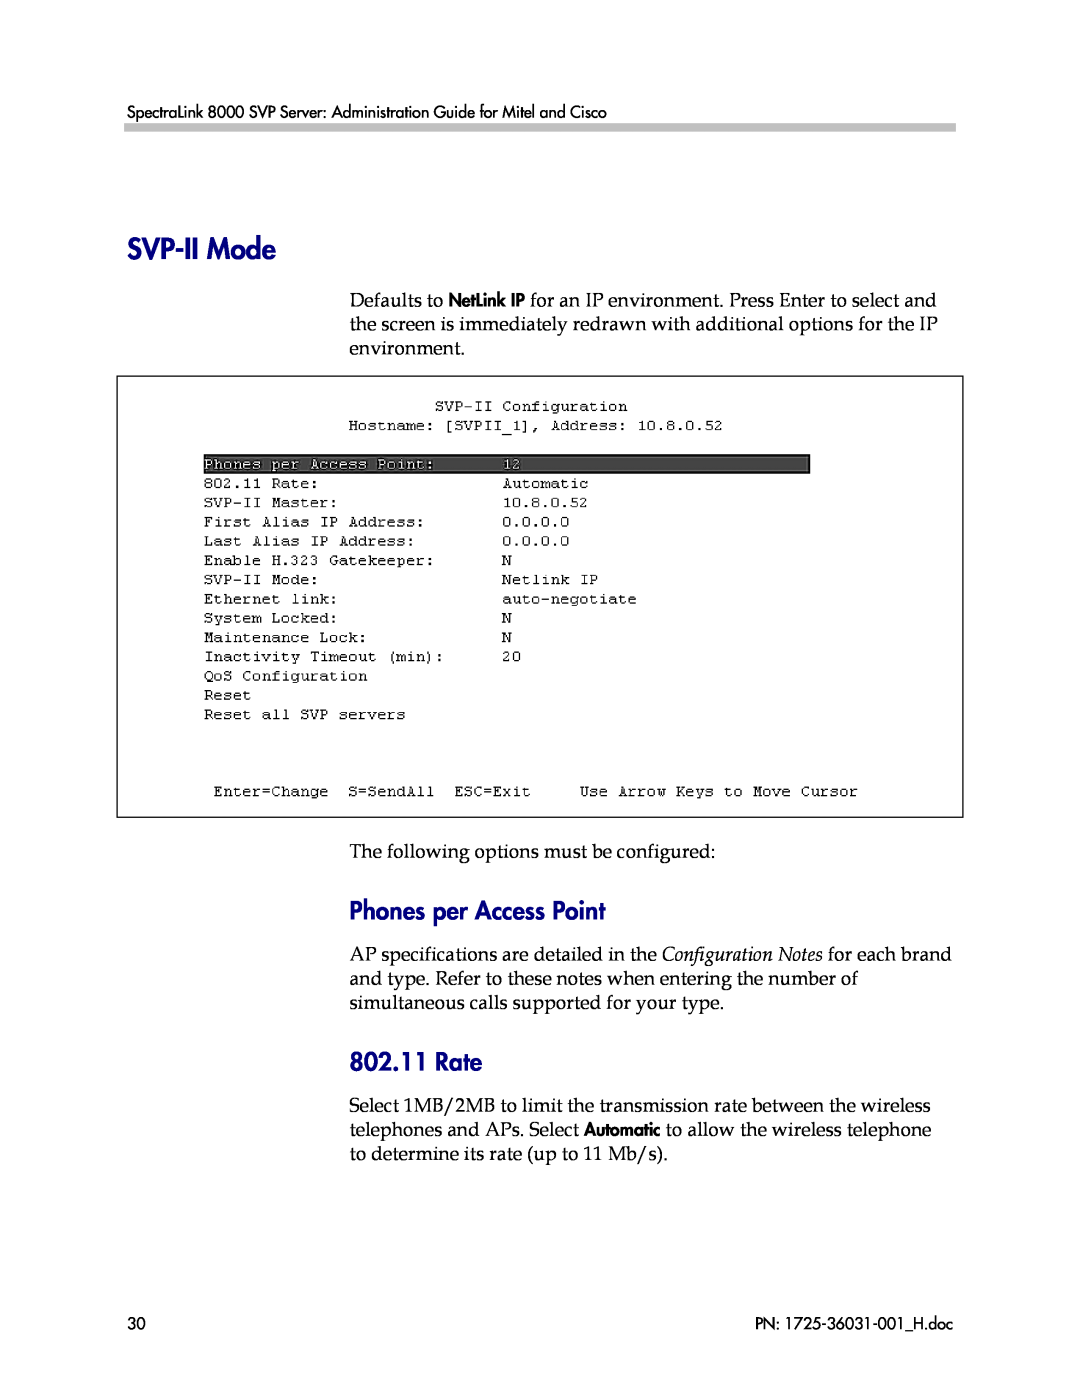 Polycom VP010, 1725-36031-001 manual SVP-II Mode, Phones per Access Point, Rate 